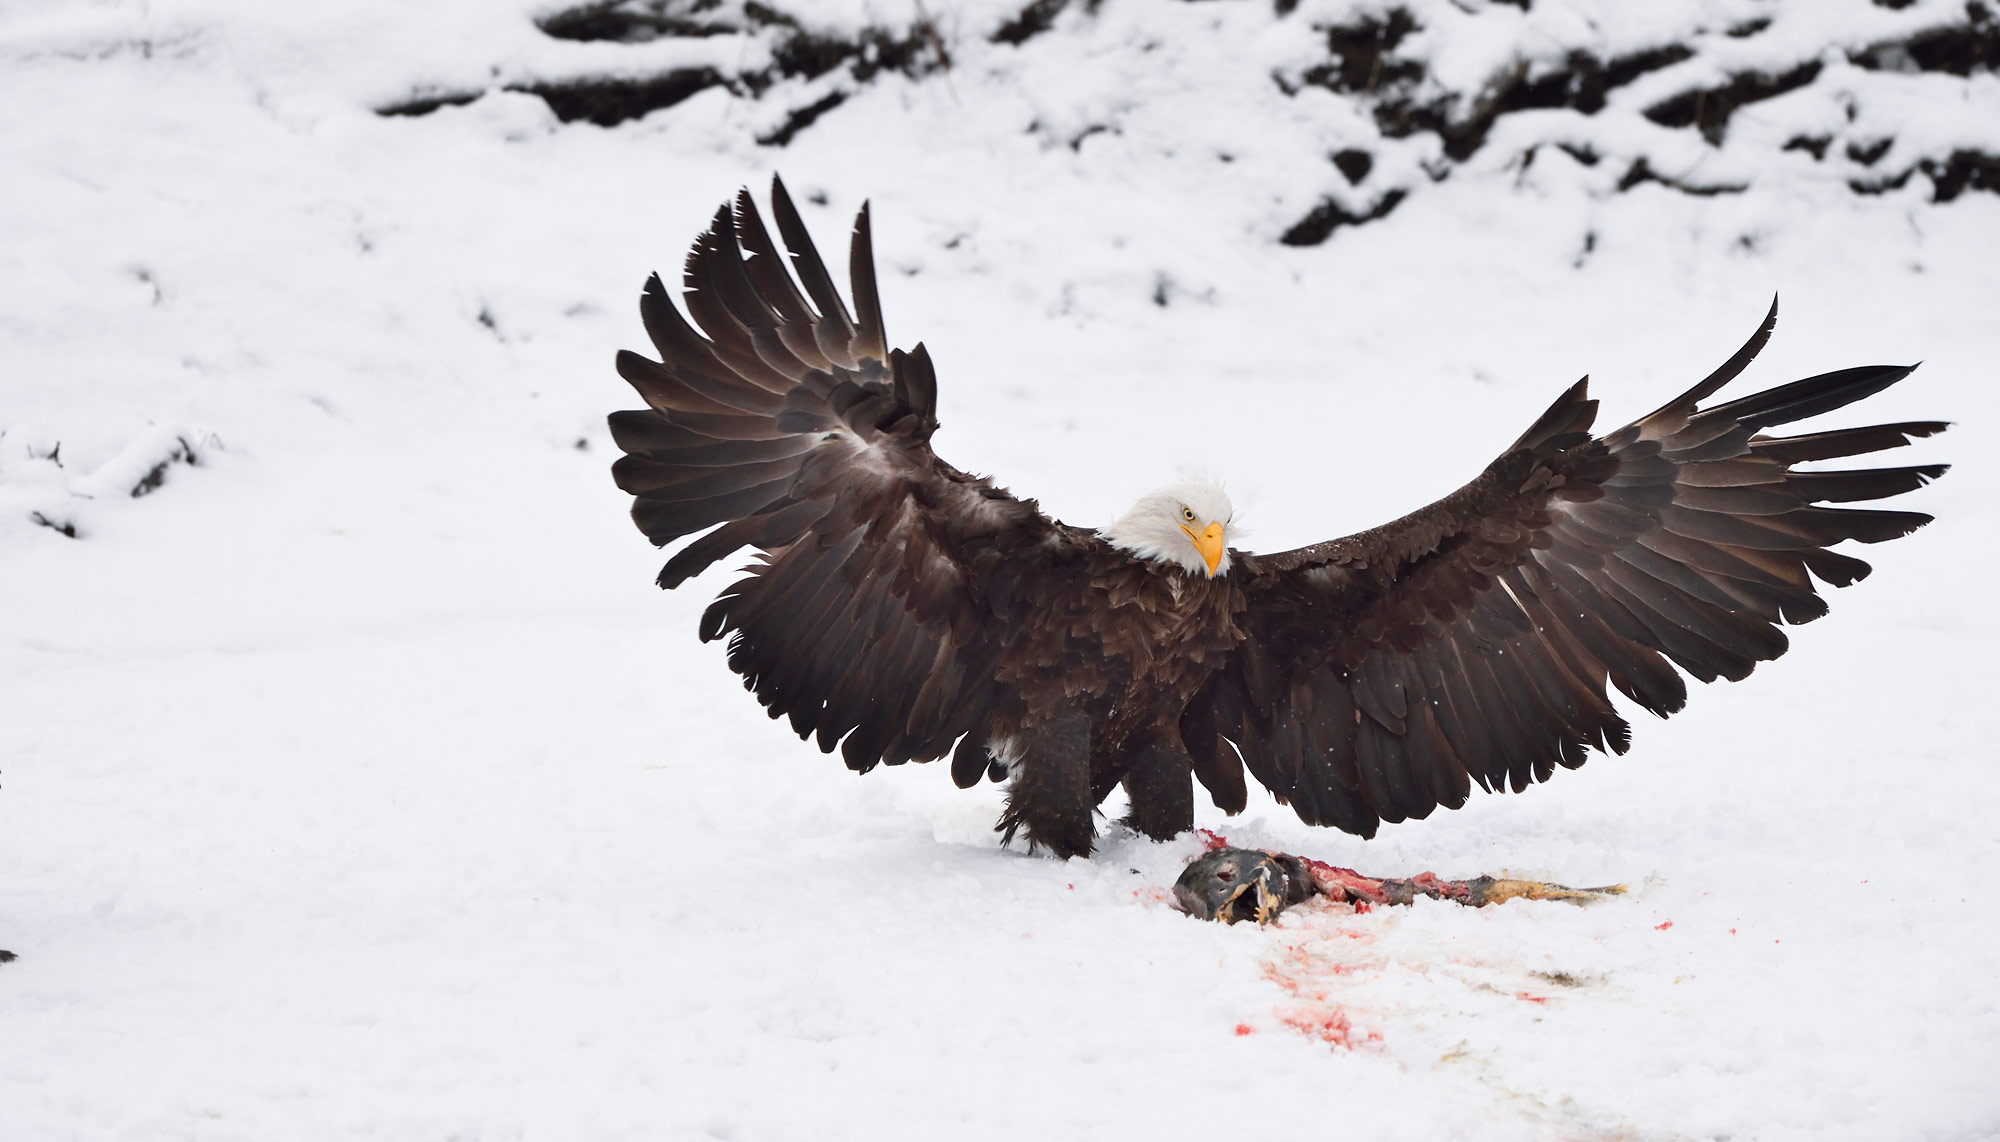 Alaska Bald Eagle Photo Tour | Bald Eagle Photography Workshop Haines